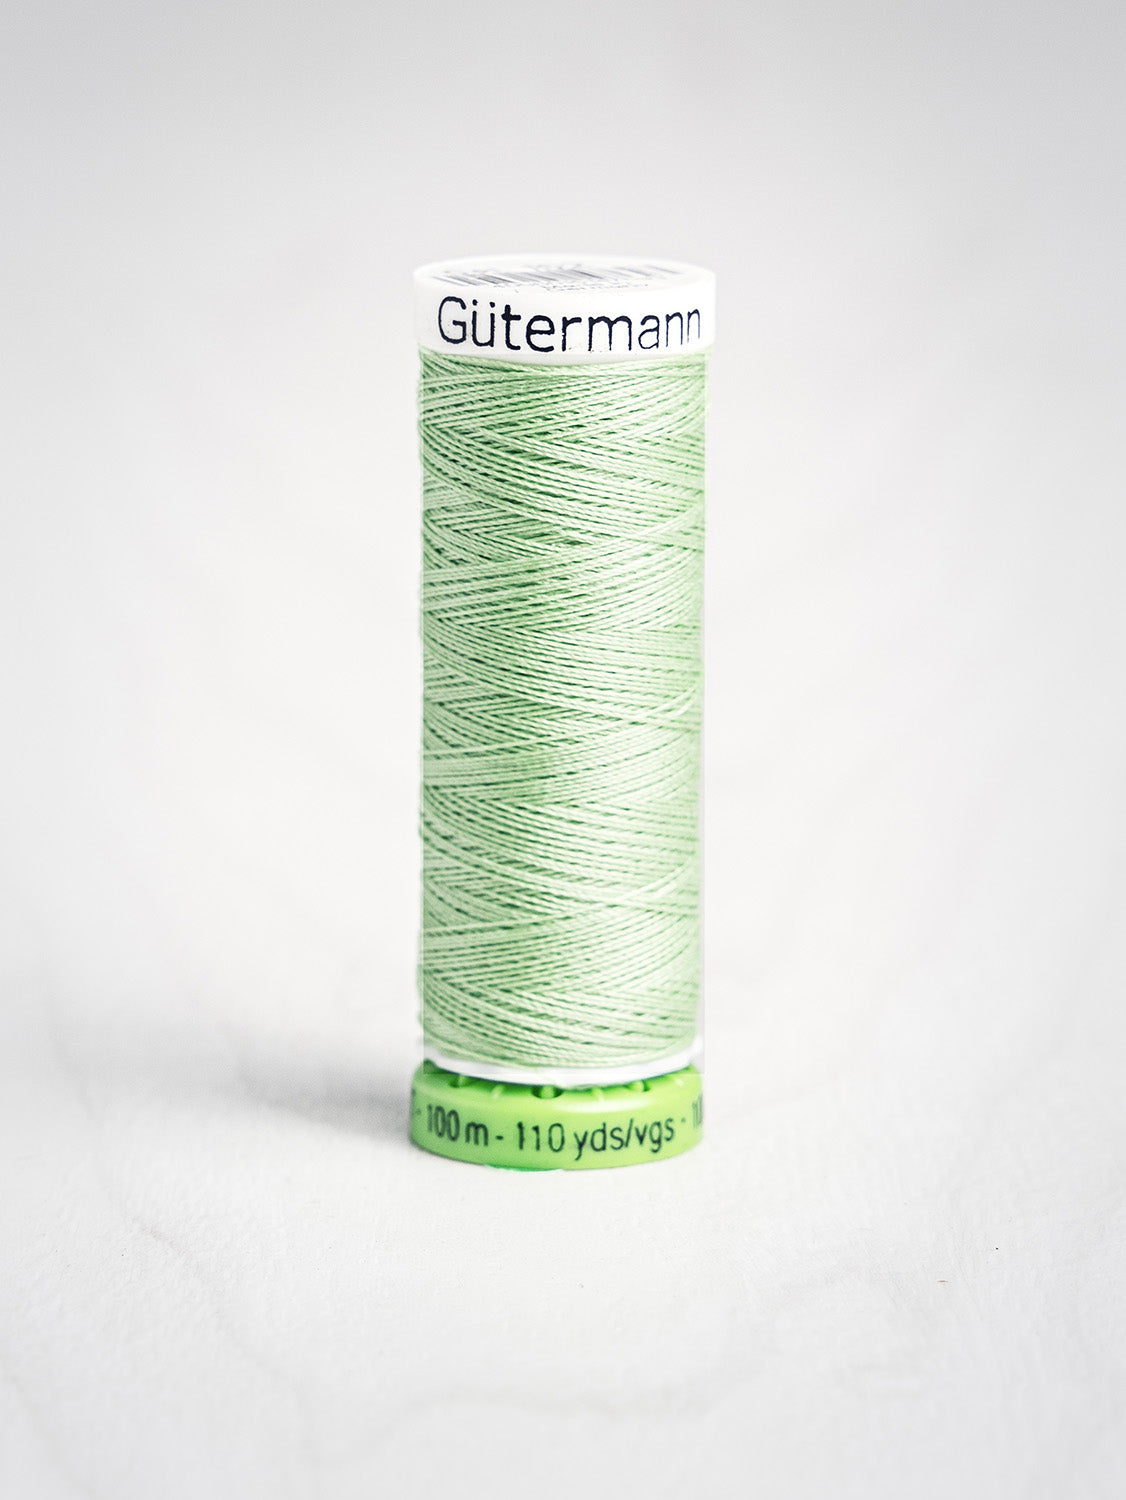 Add matching Gutermann Polyester Thread, 100m